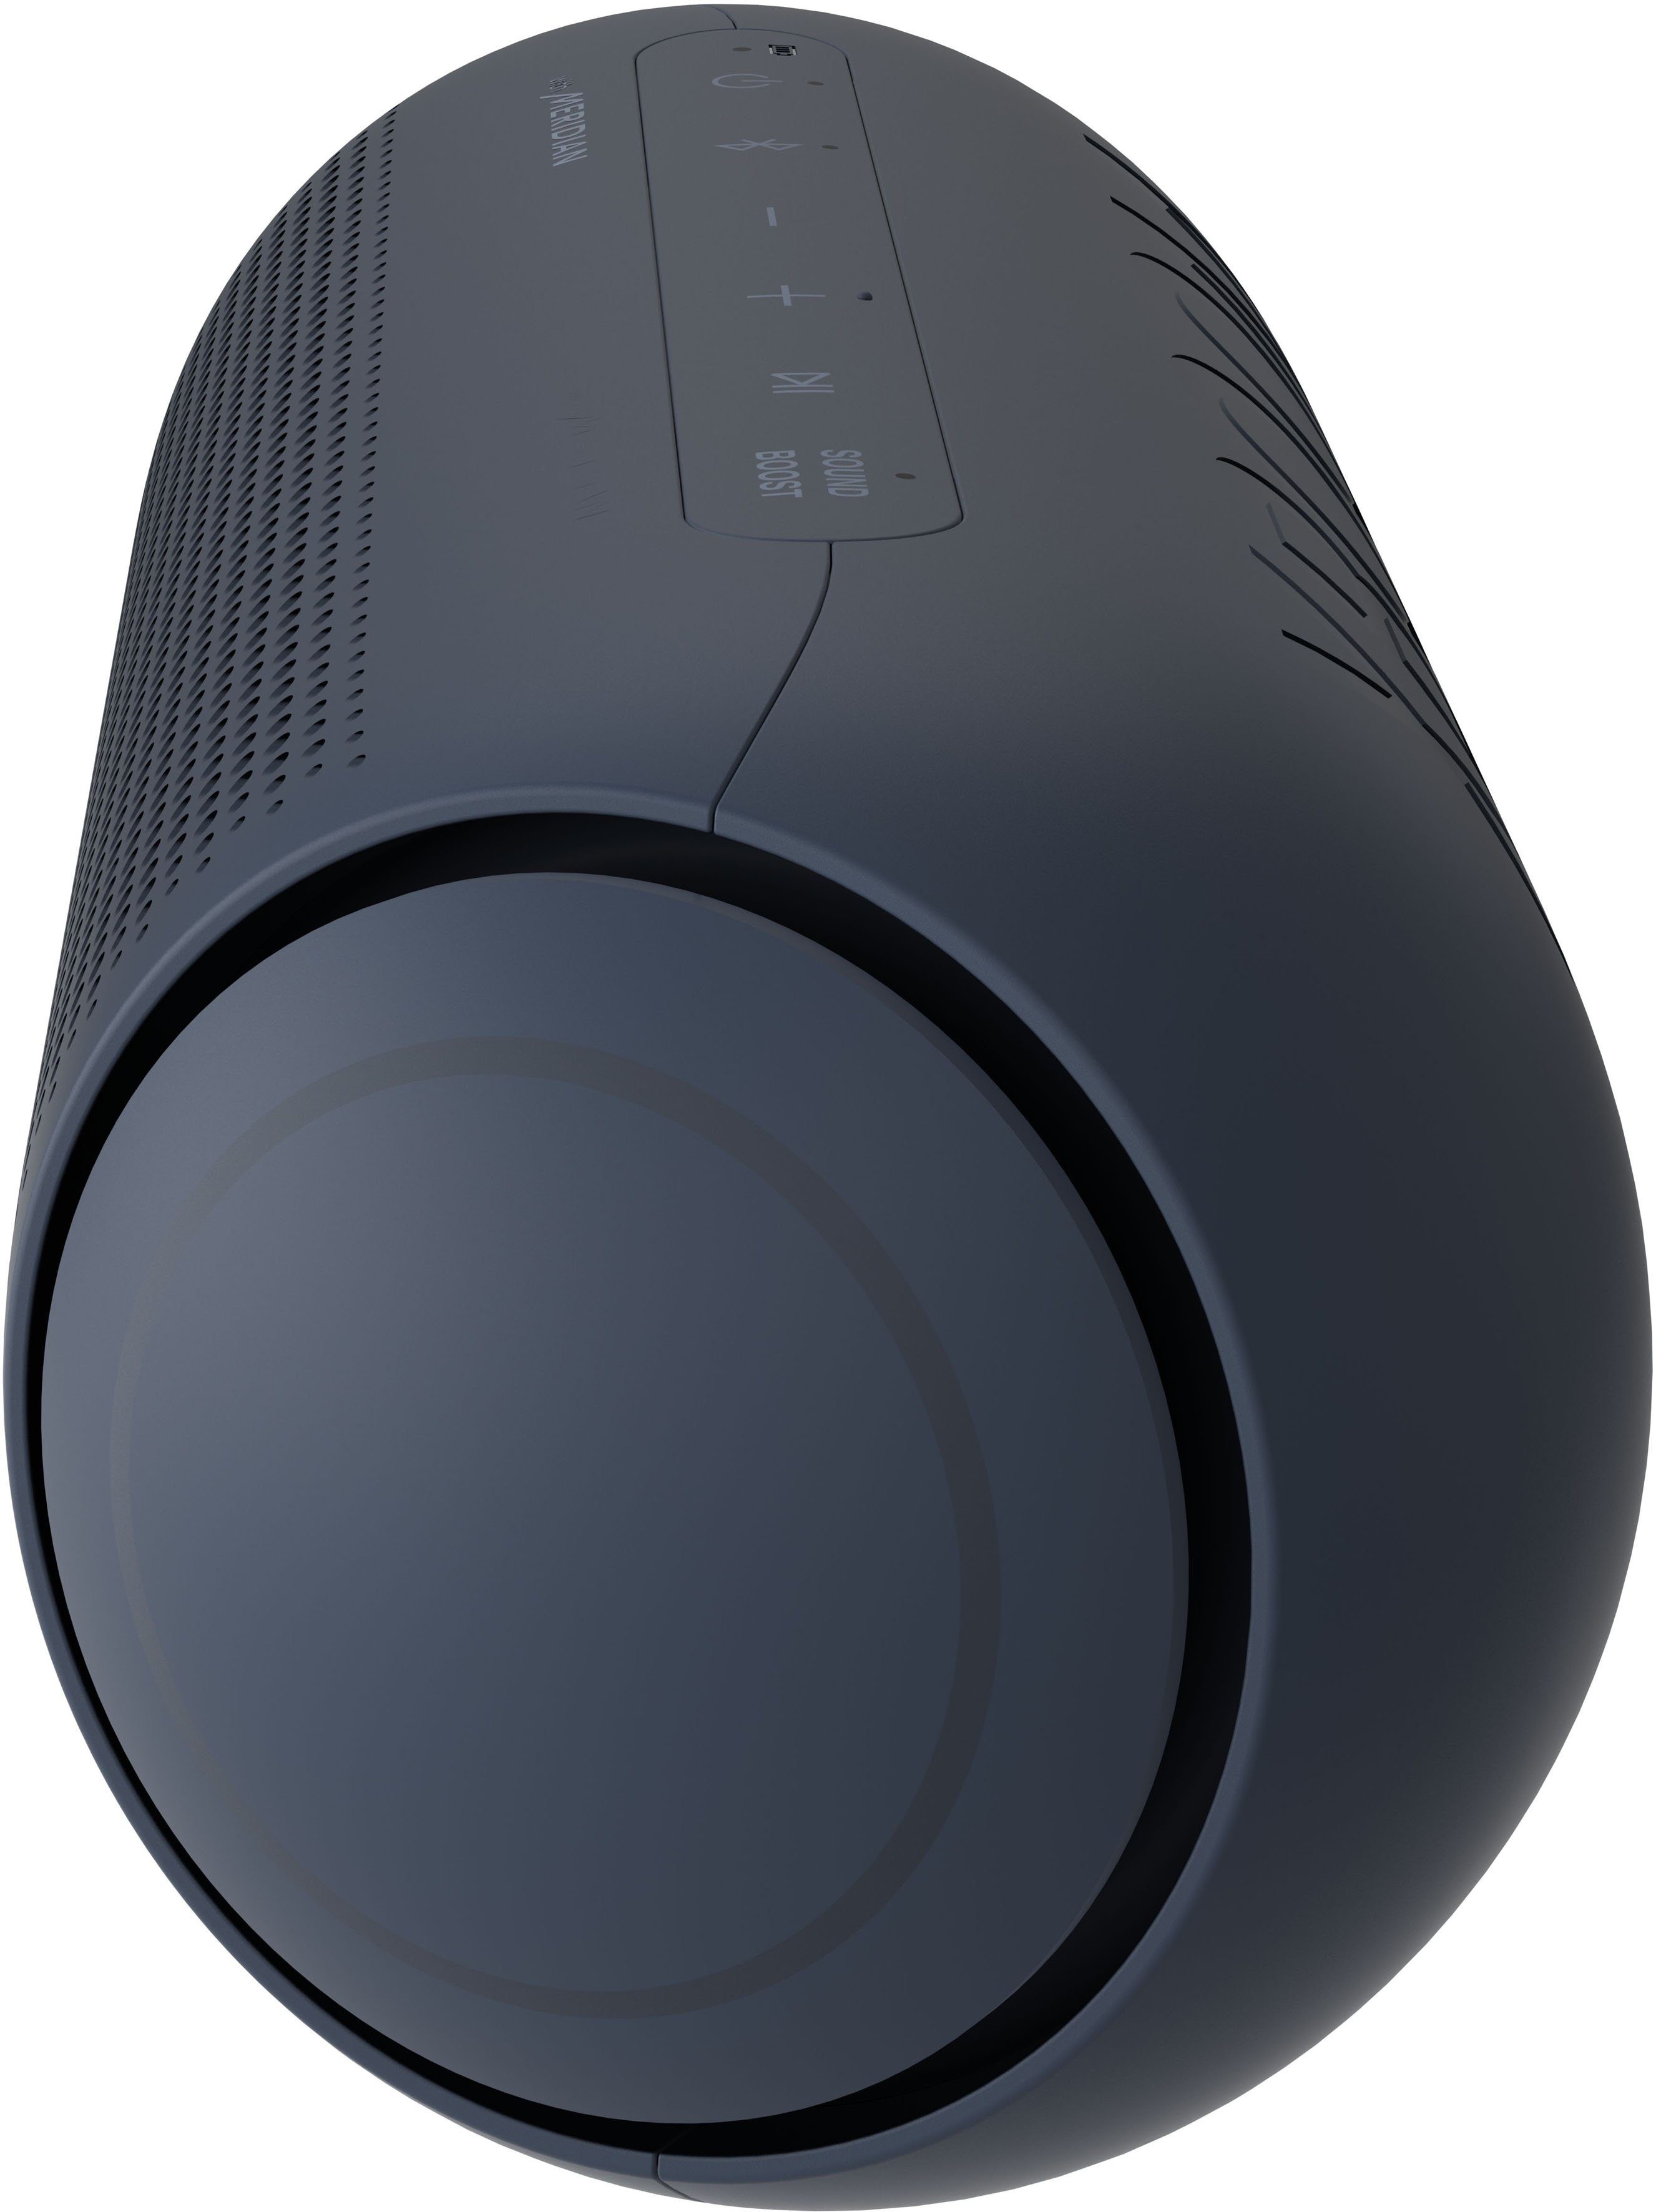 Go Stereo Multipoint-Anbindung) PL5 (Bluetooth, XBOOM Bluetooth-Lautsprecher LG